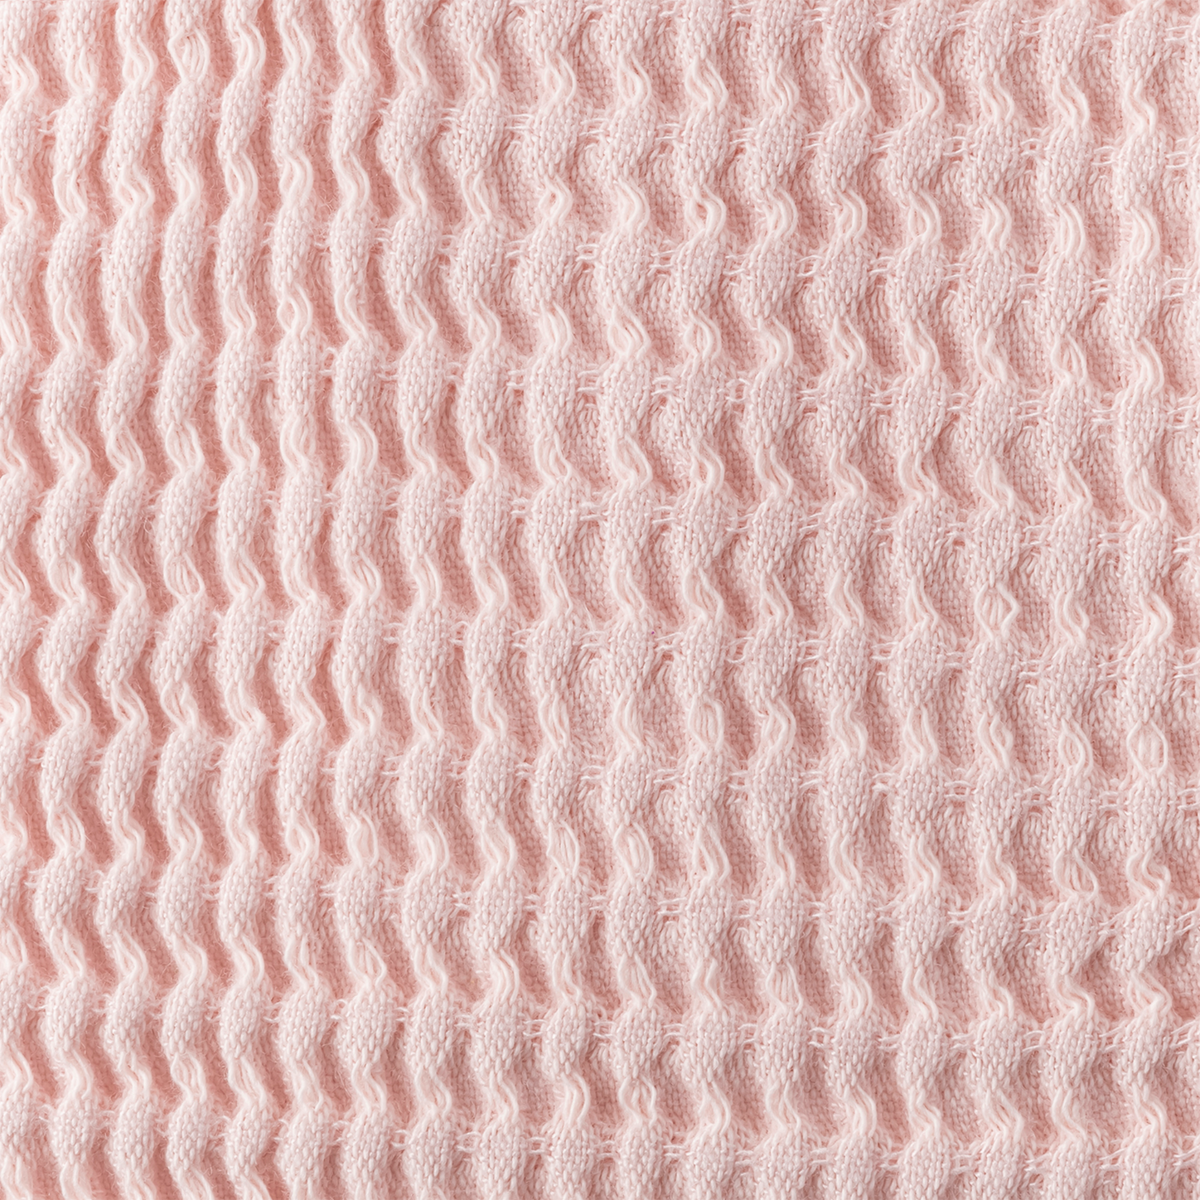 Swatch Sample of Matouk Kiran Waffle Towels in Blush Color